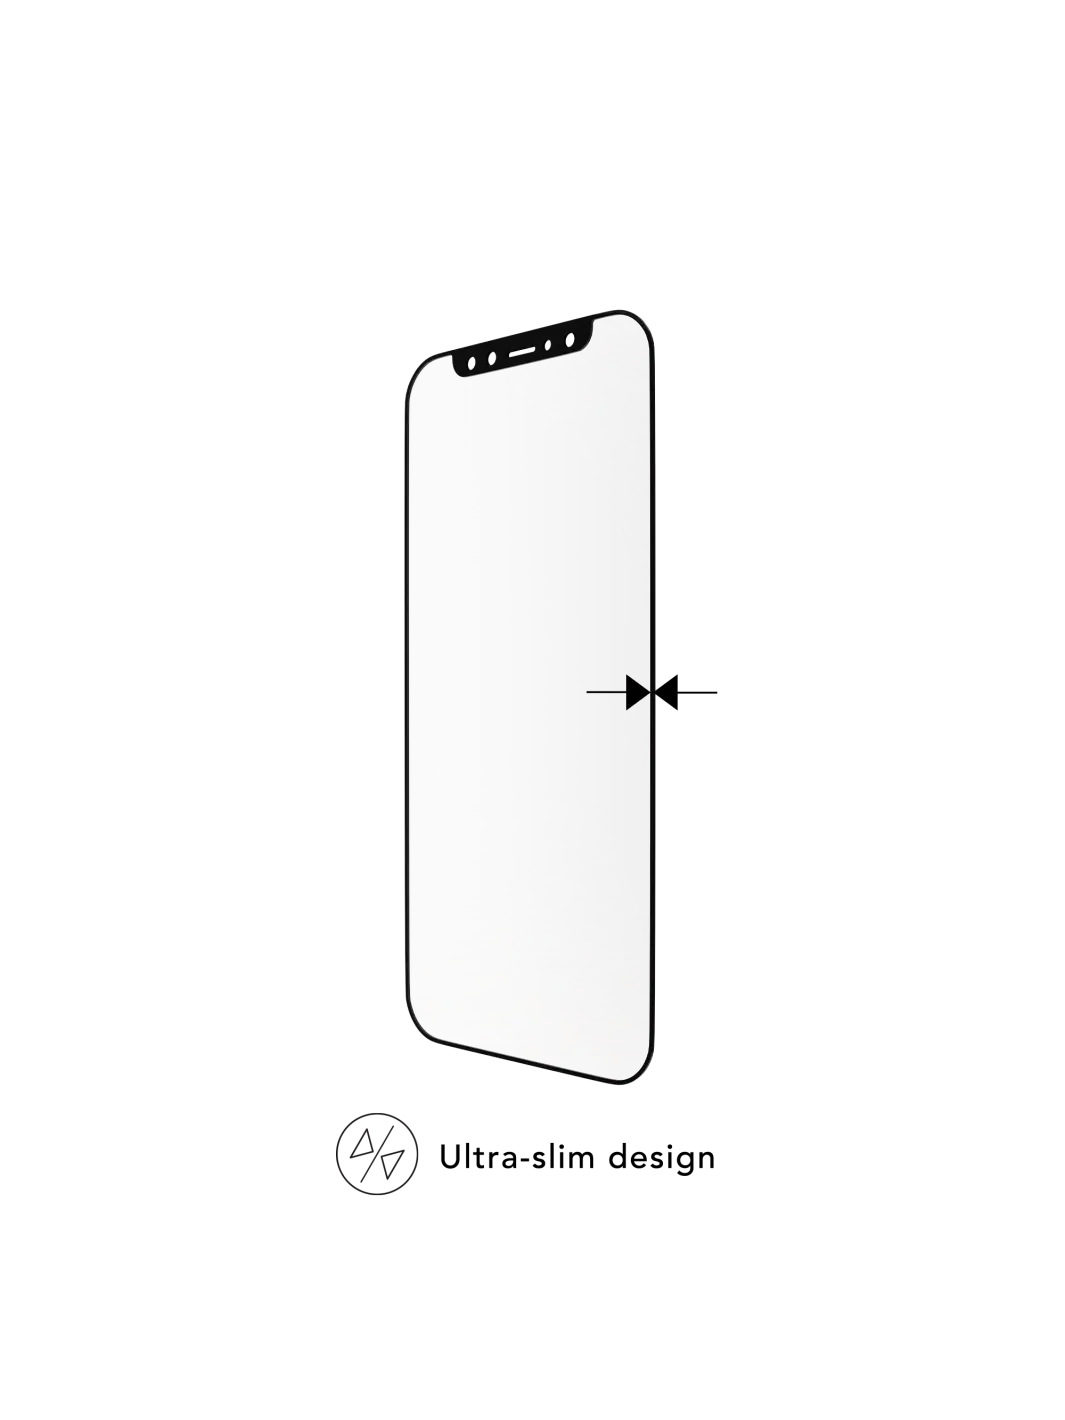 eco-shield - Phones iPhone X Xs 11 Pro Phone Cases